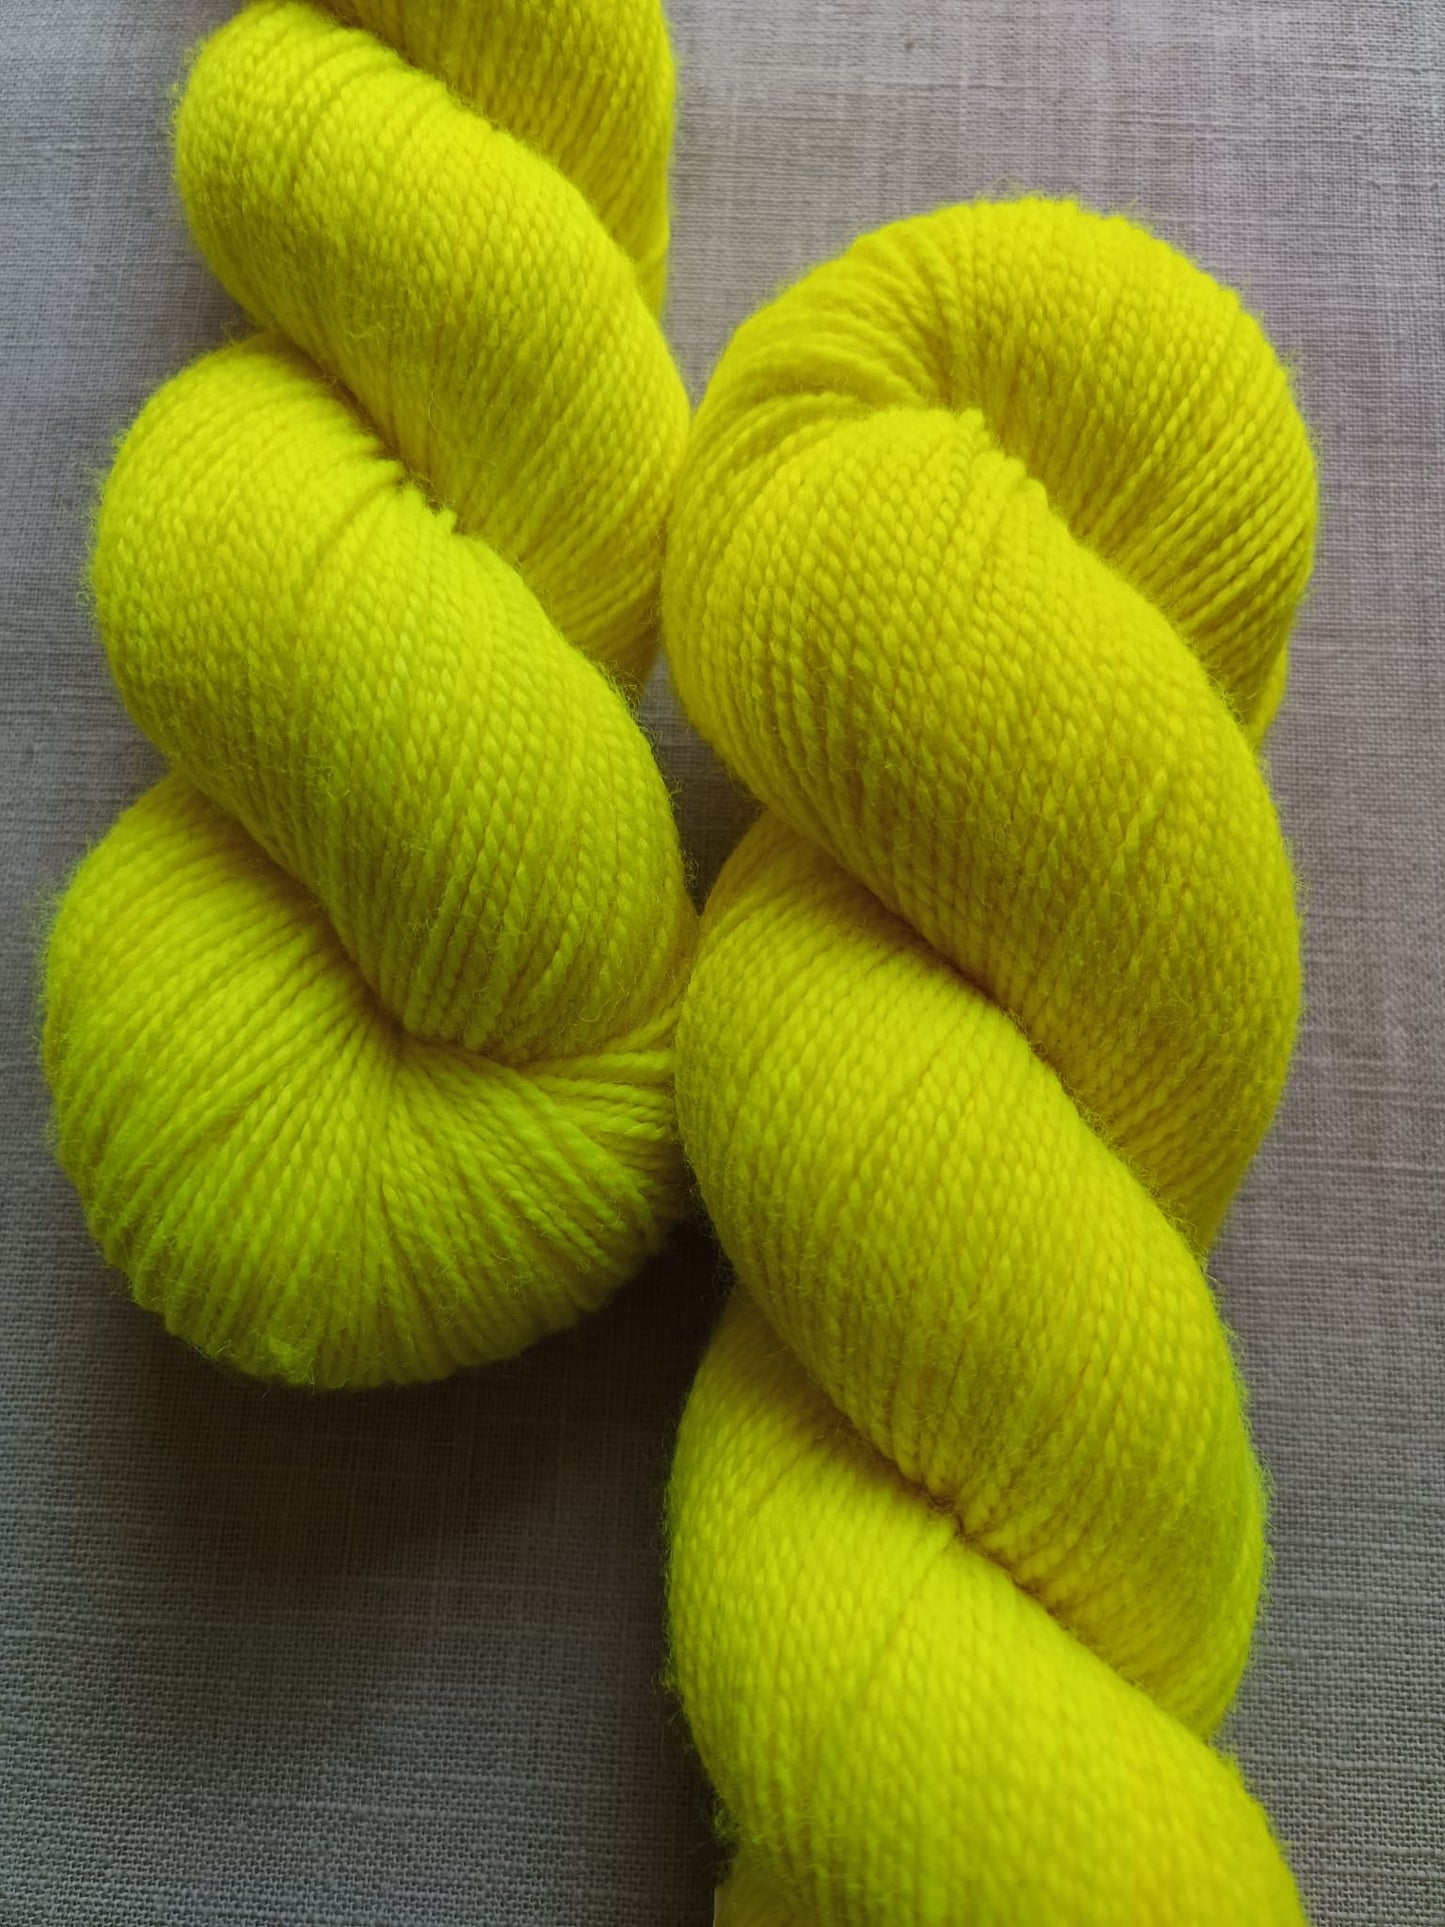 The Yellow - Gallus Sock